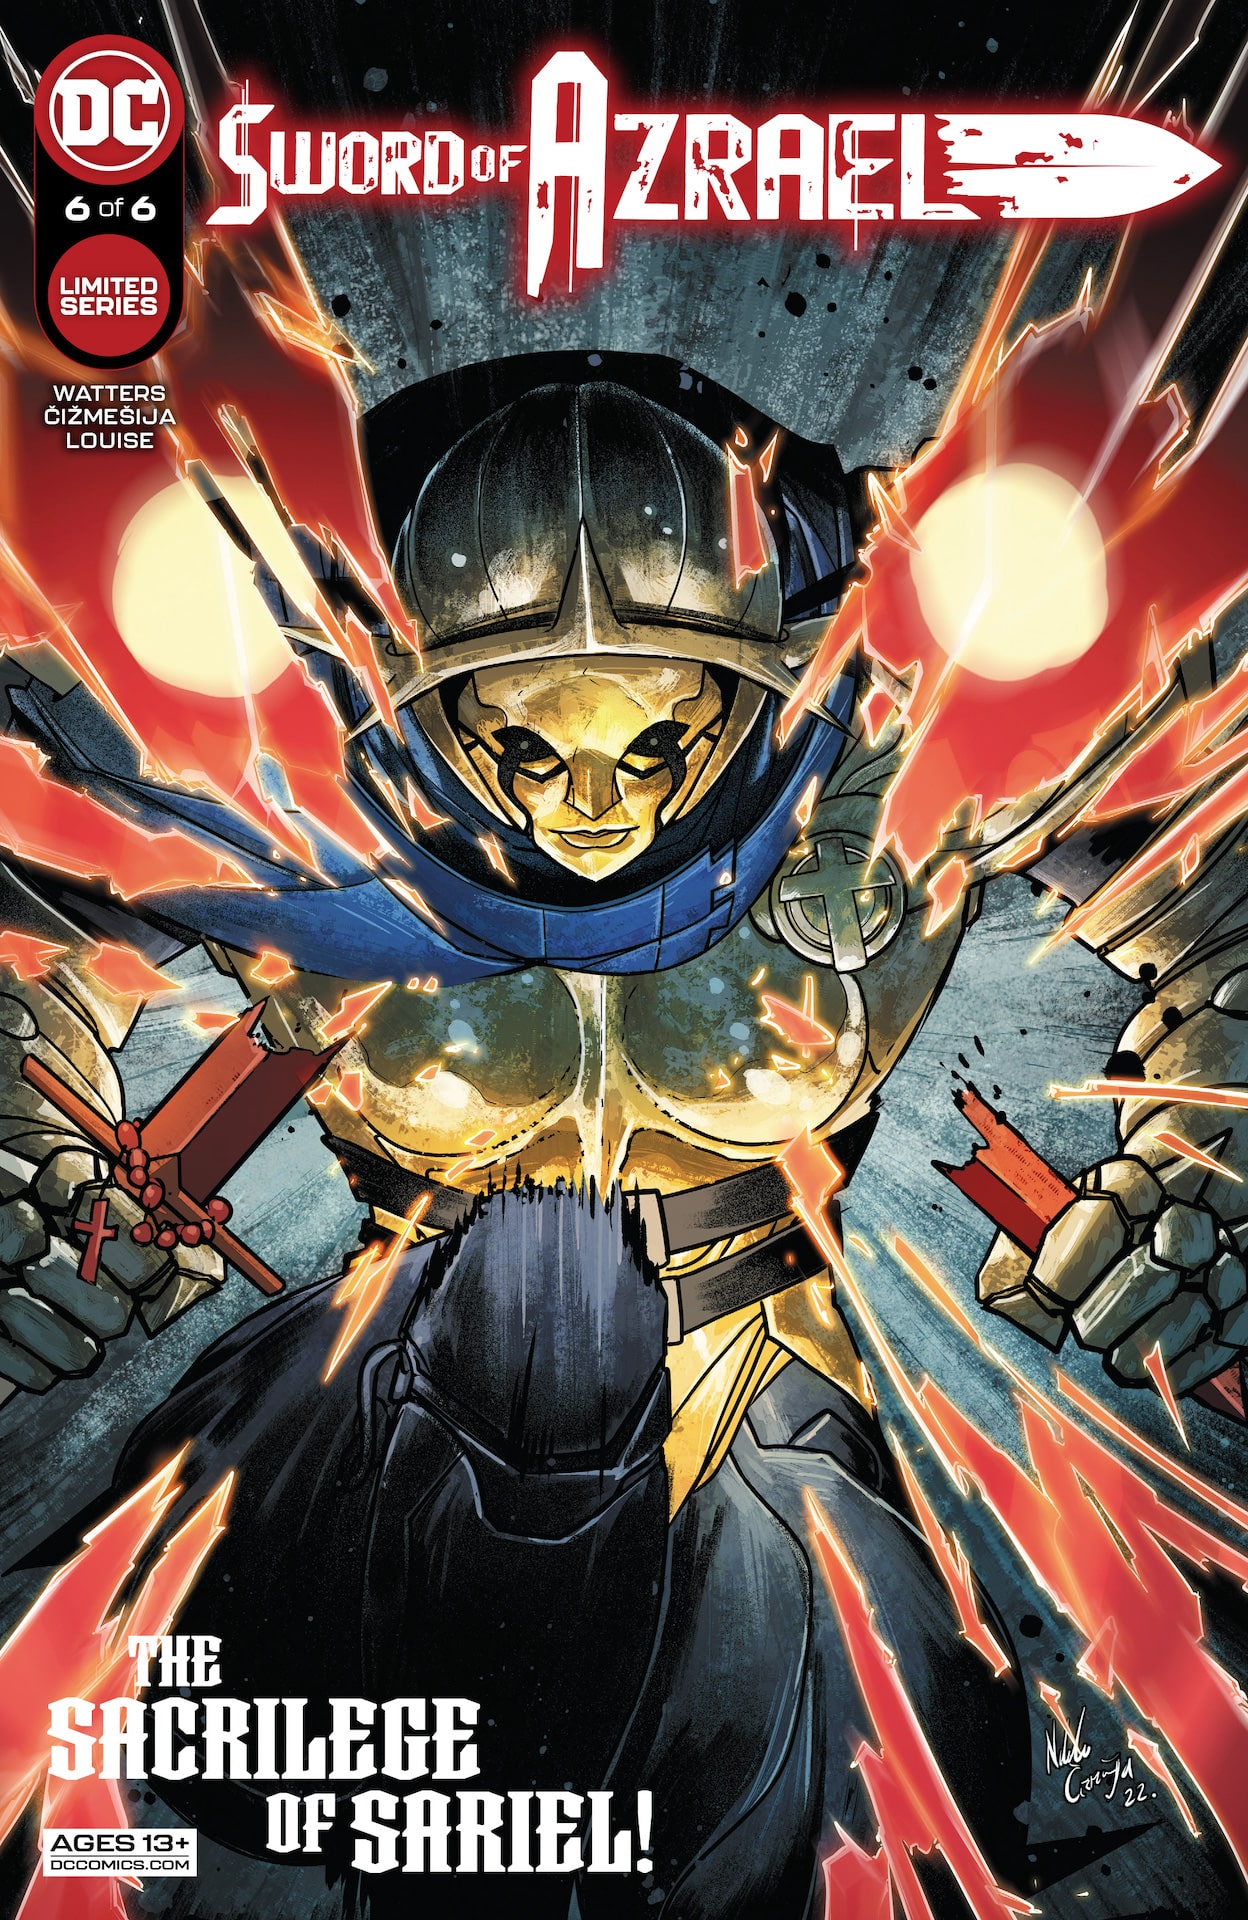 DC Preview: Sword of Azrael #6